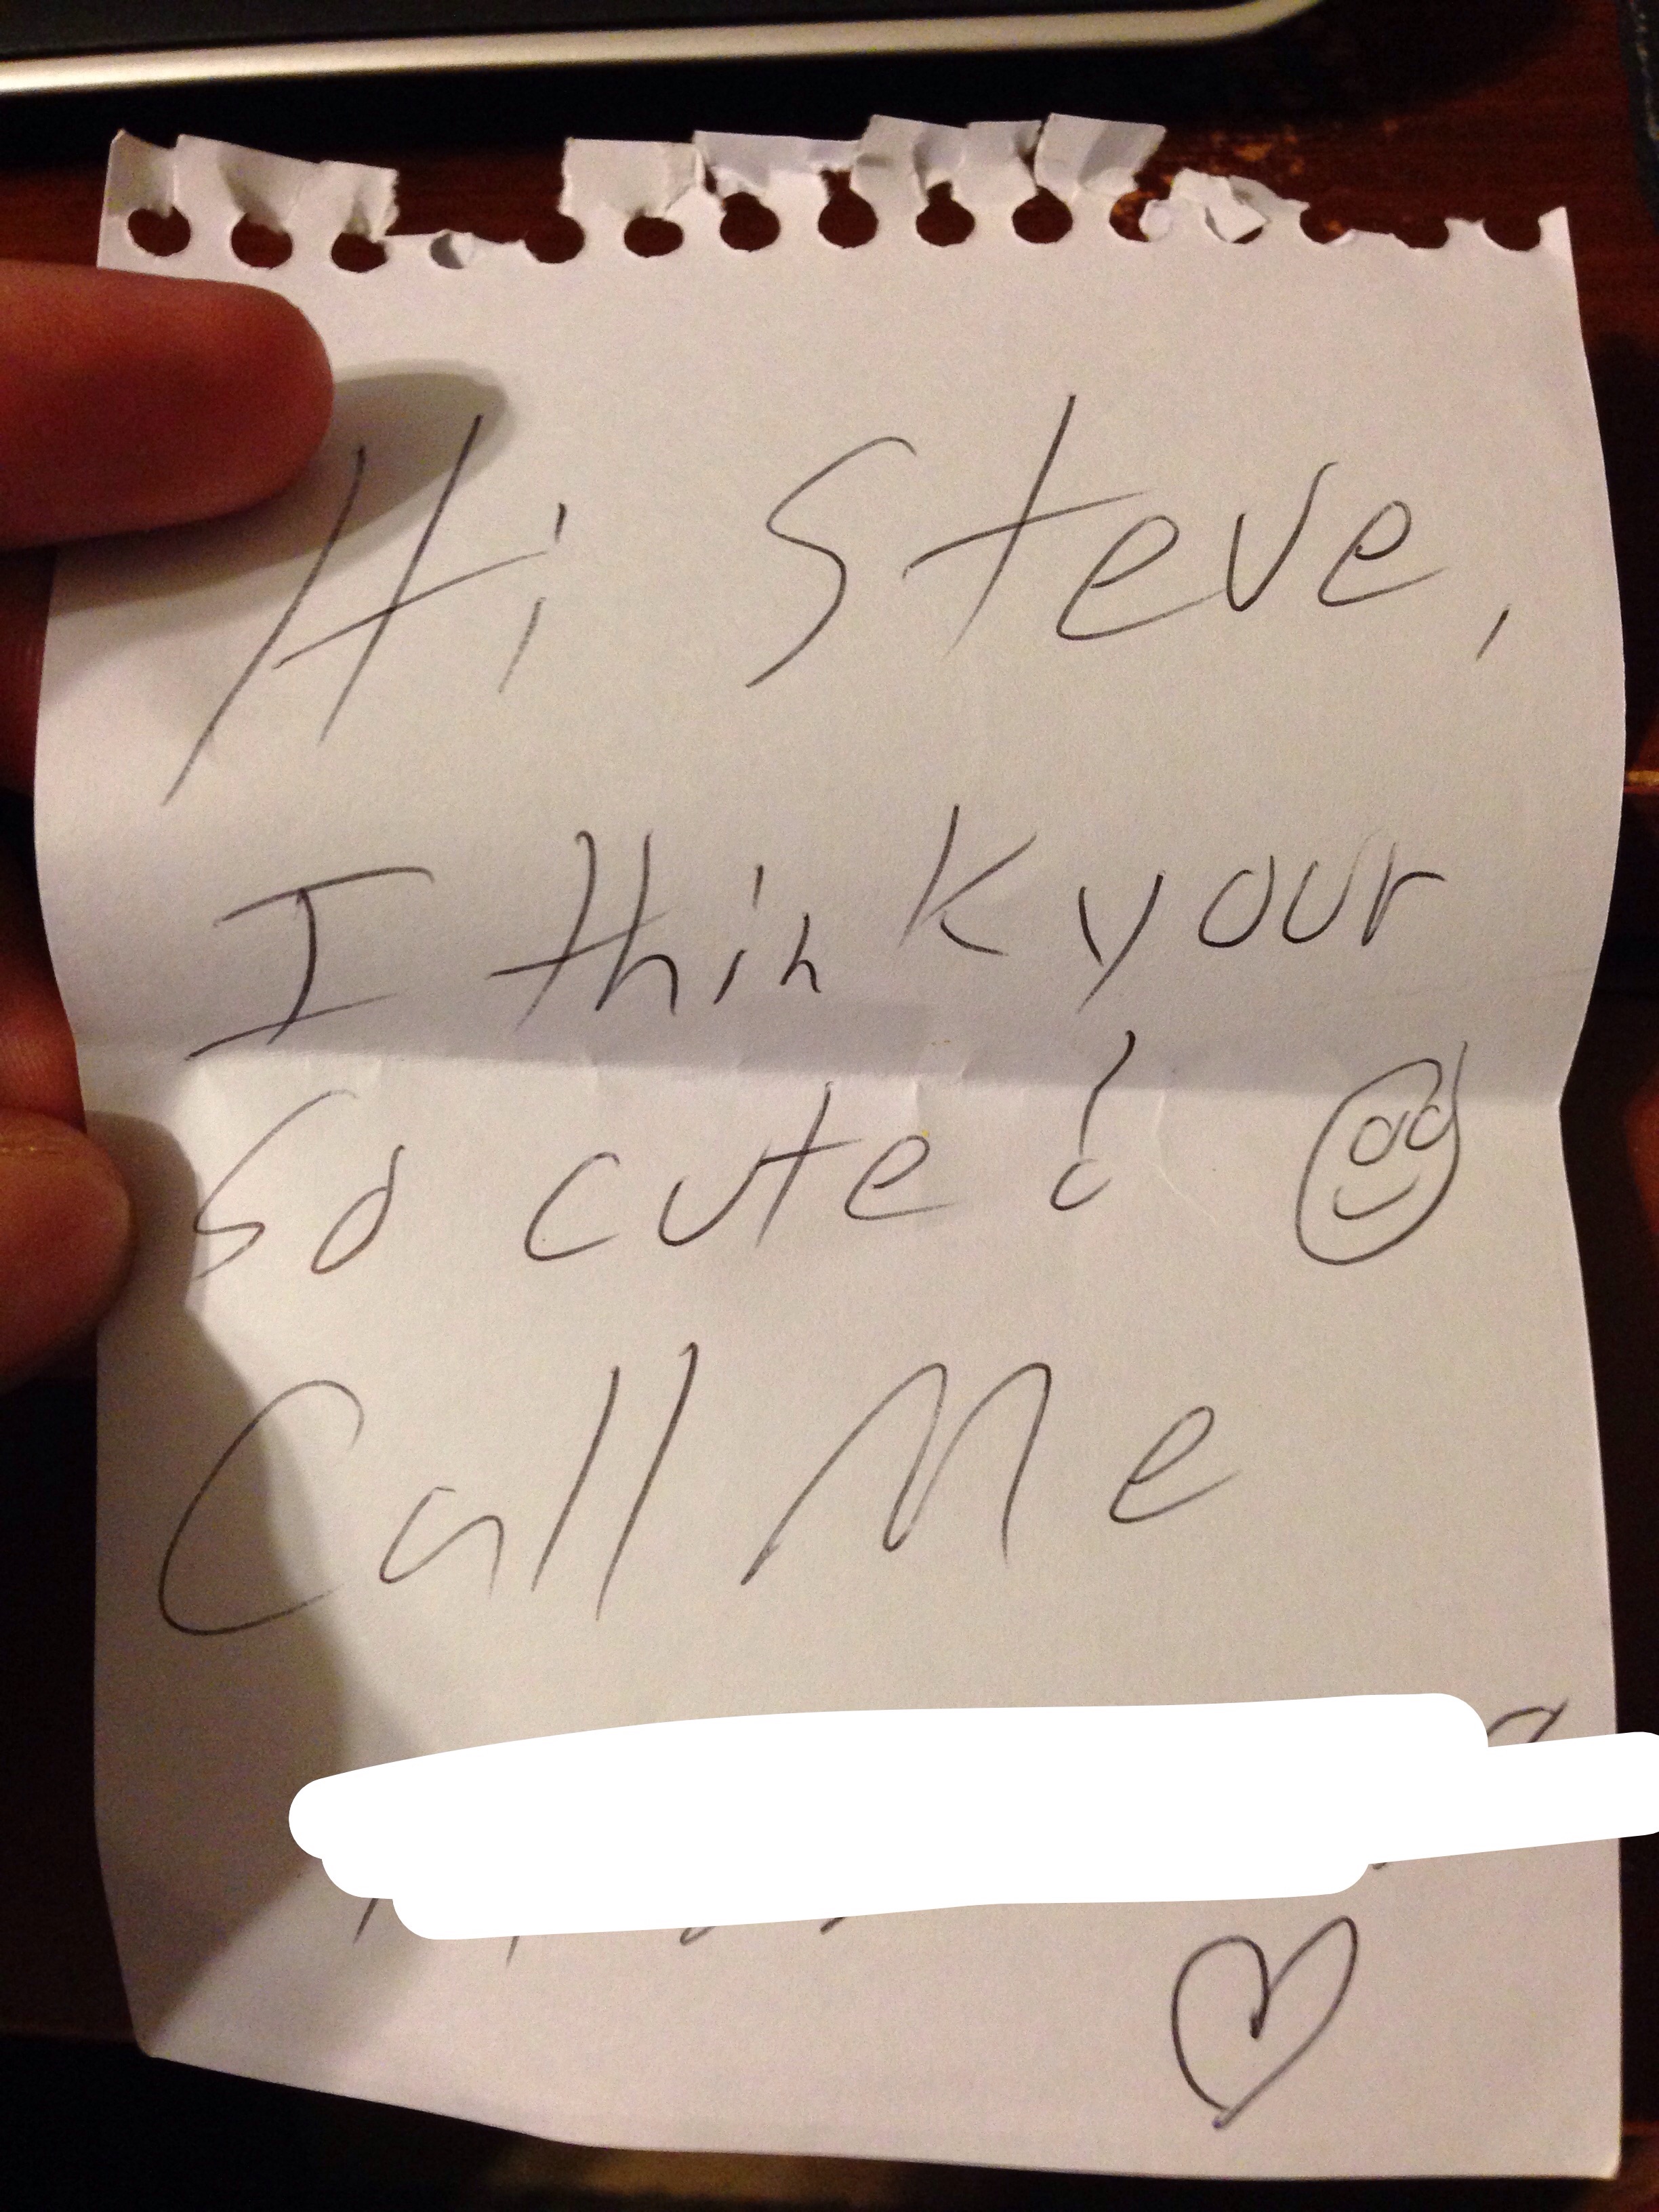 handwriting - Steve, I think your so cute & all me